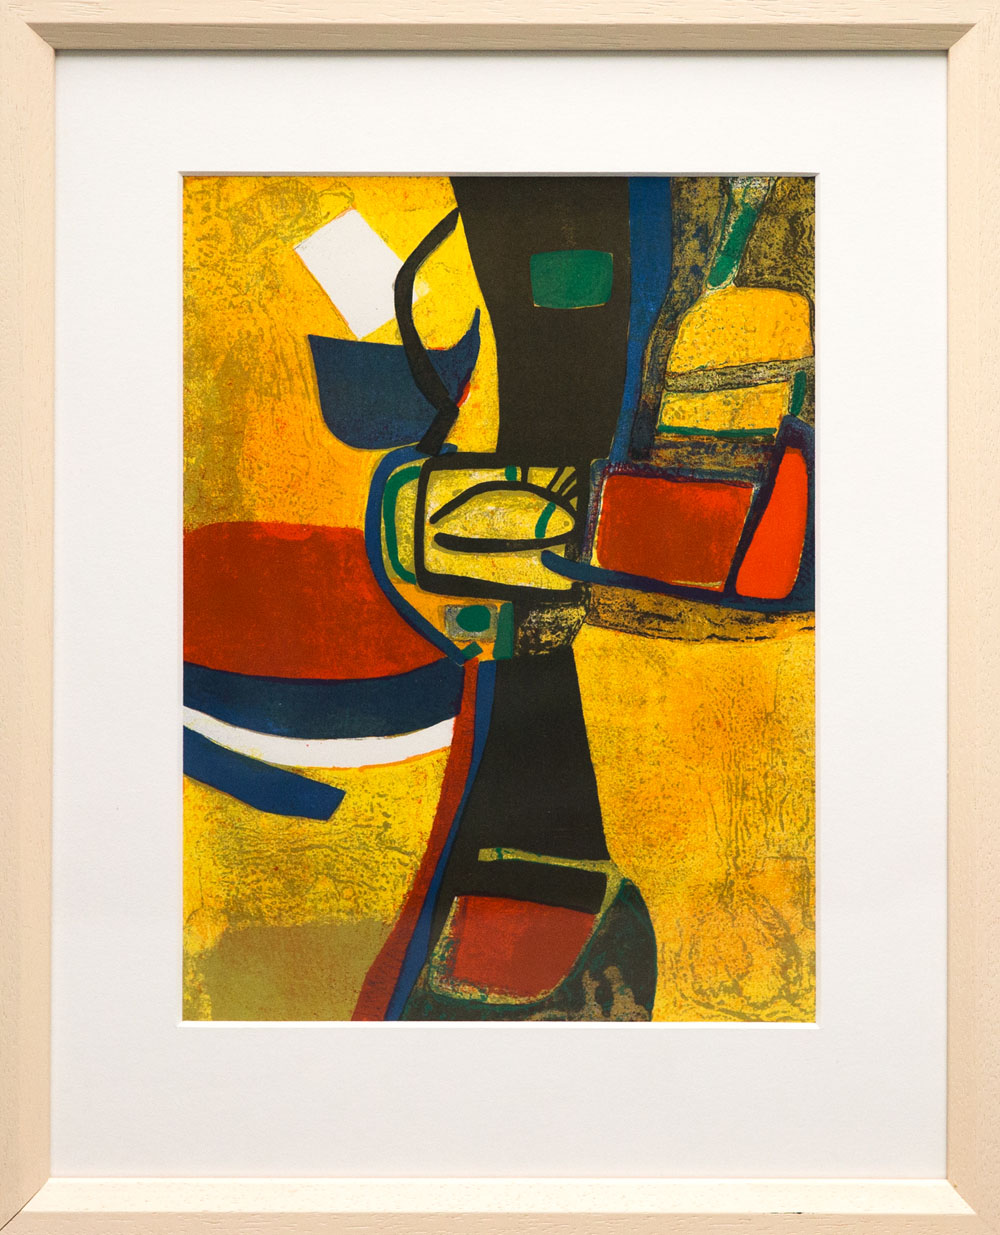 MAURICE ESTÈVE, 'Untitled (Corne à Licou)', lithograph, 1965, 31cm x 23cm, framed and glazed.